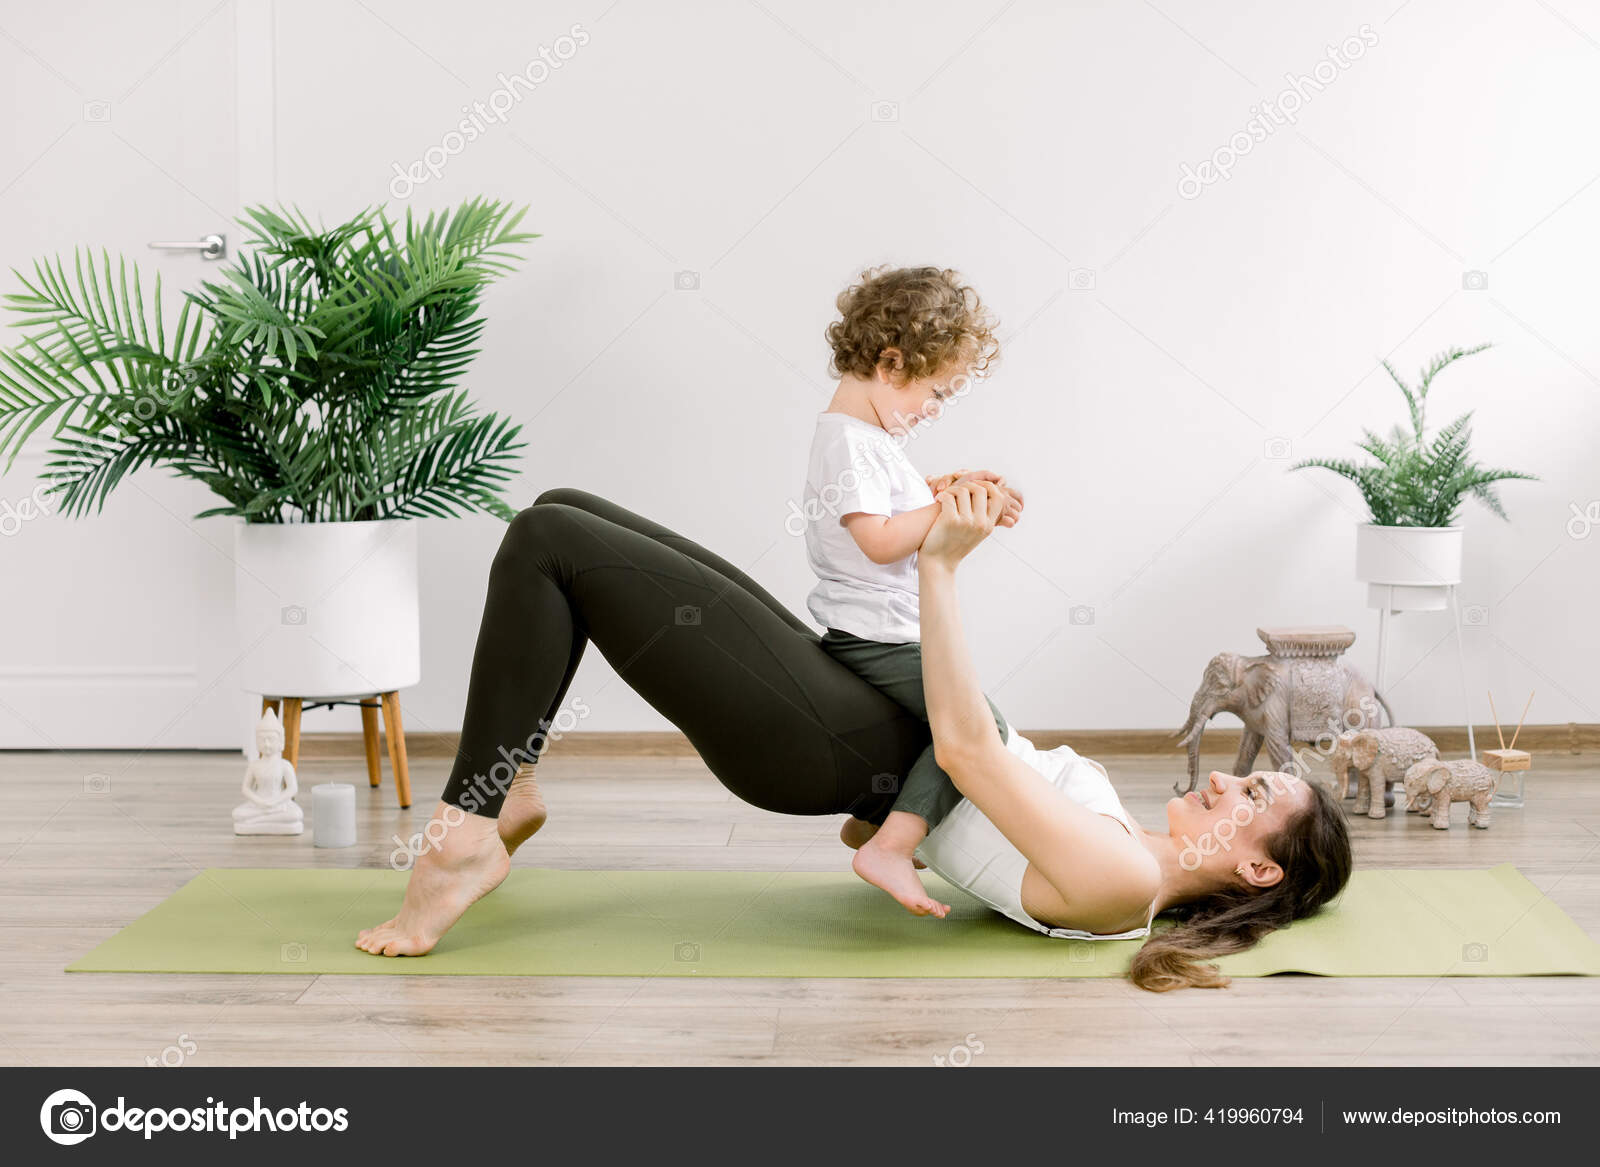 https://st2.depositphotos.com/13910344/41996/i/1600/depositphotos_419960794-stock-photo-young-happy-sporty-woman-mother.jpg